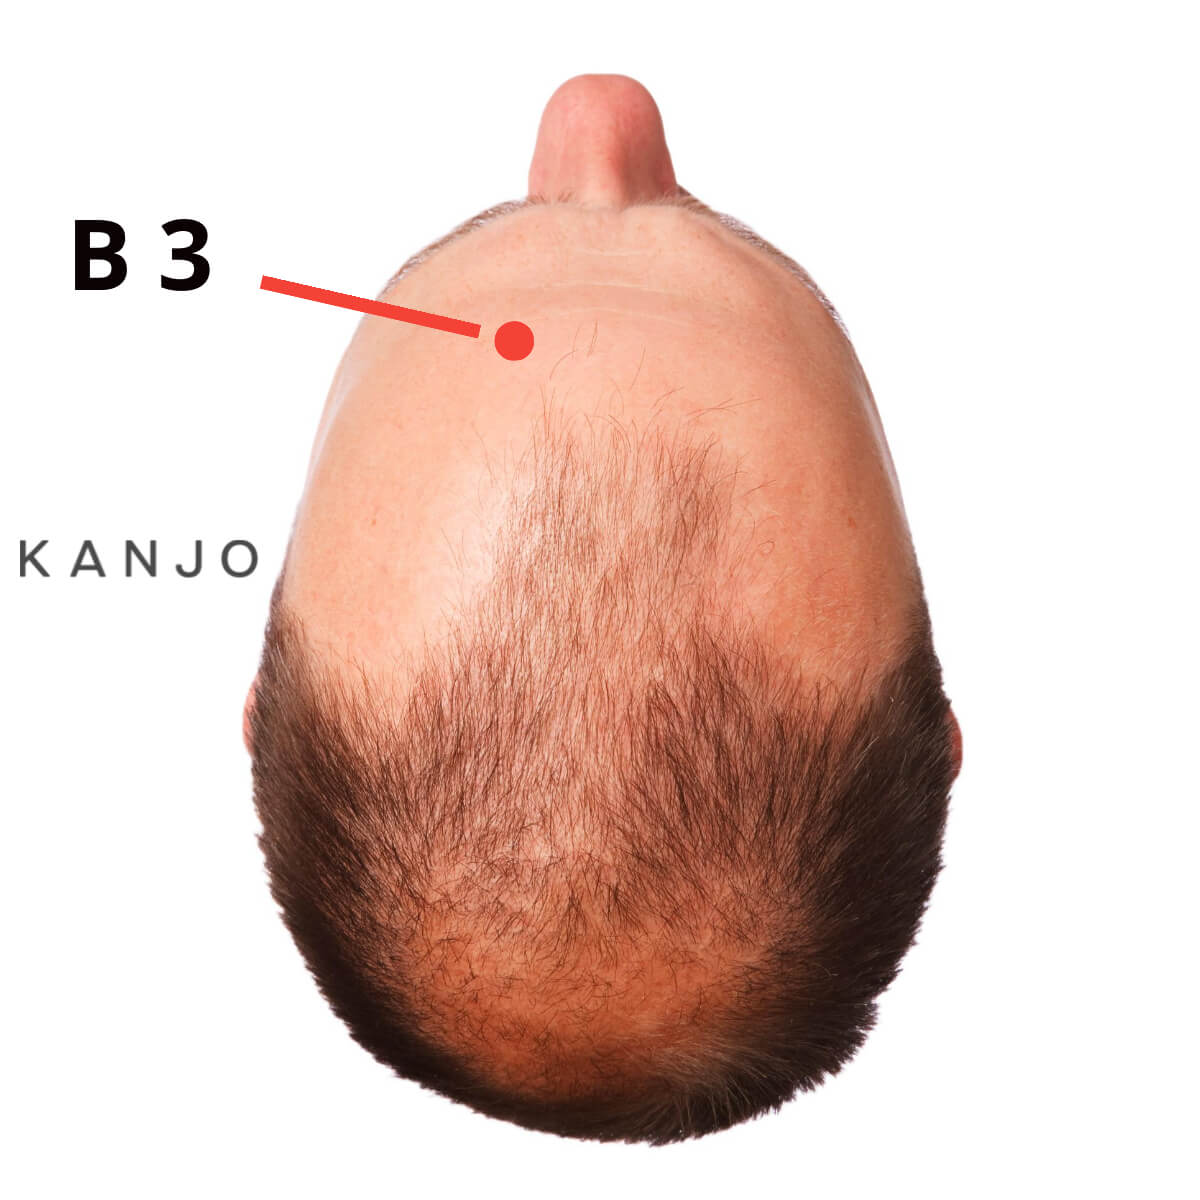 Bladder 3 (B 3 or UB 3) — Meichong or Eyebrow Ascension